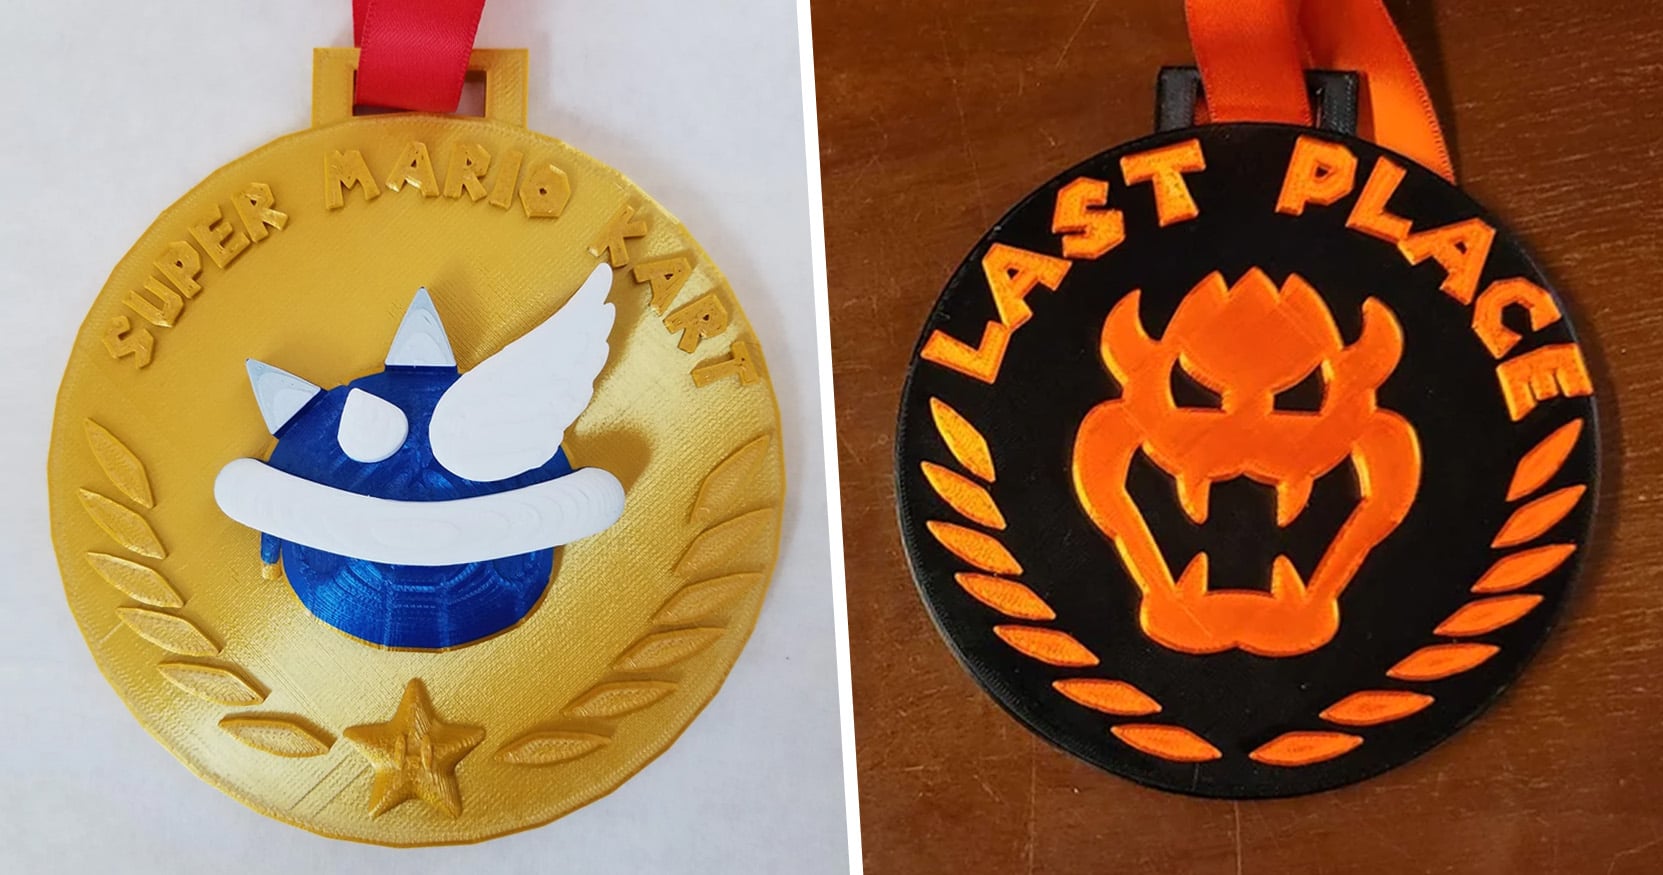 Mario Kart Tournament Placement Medals